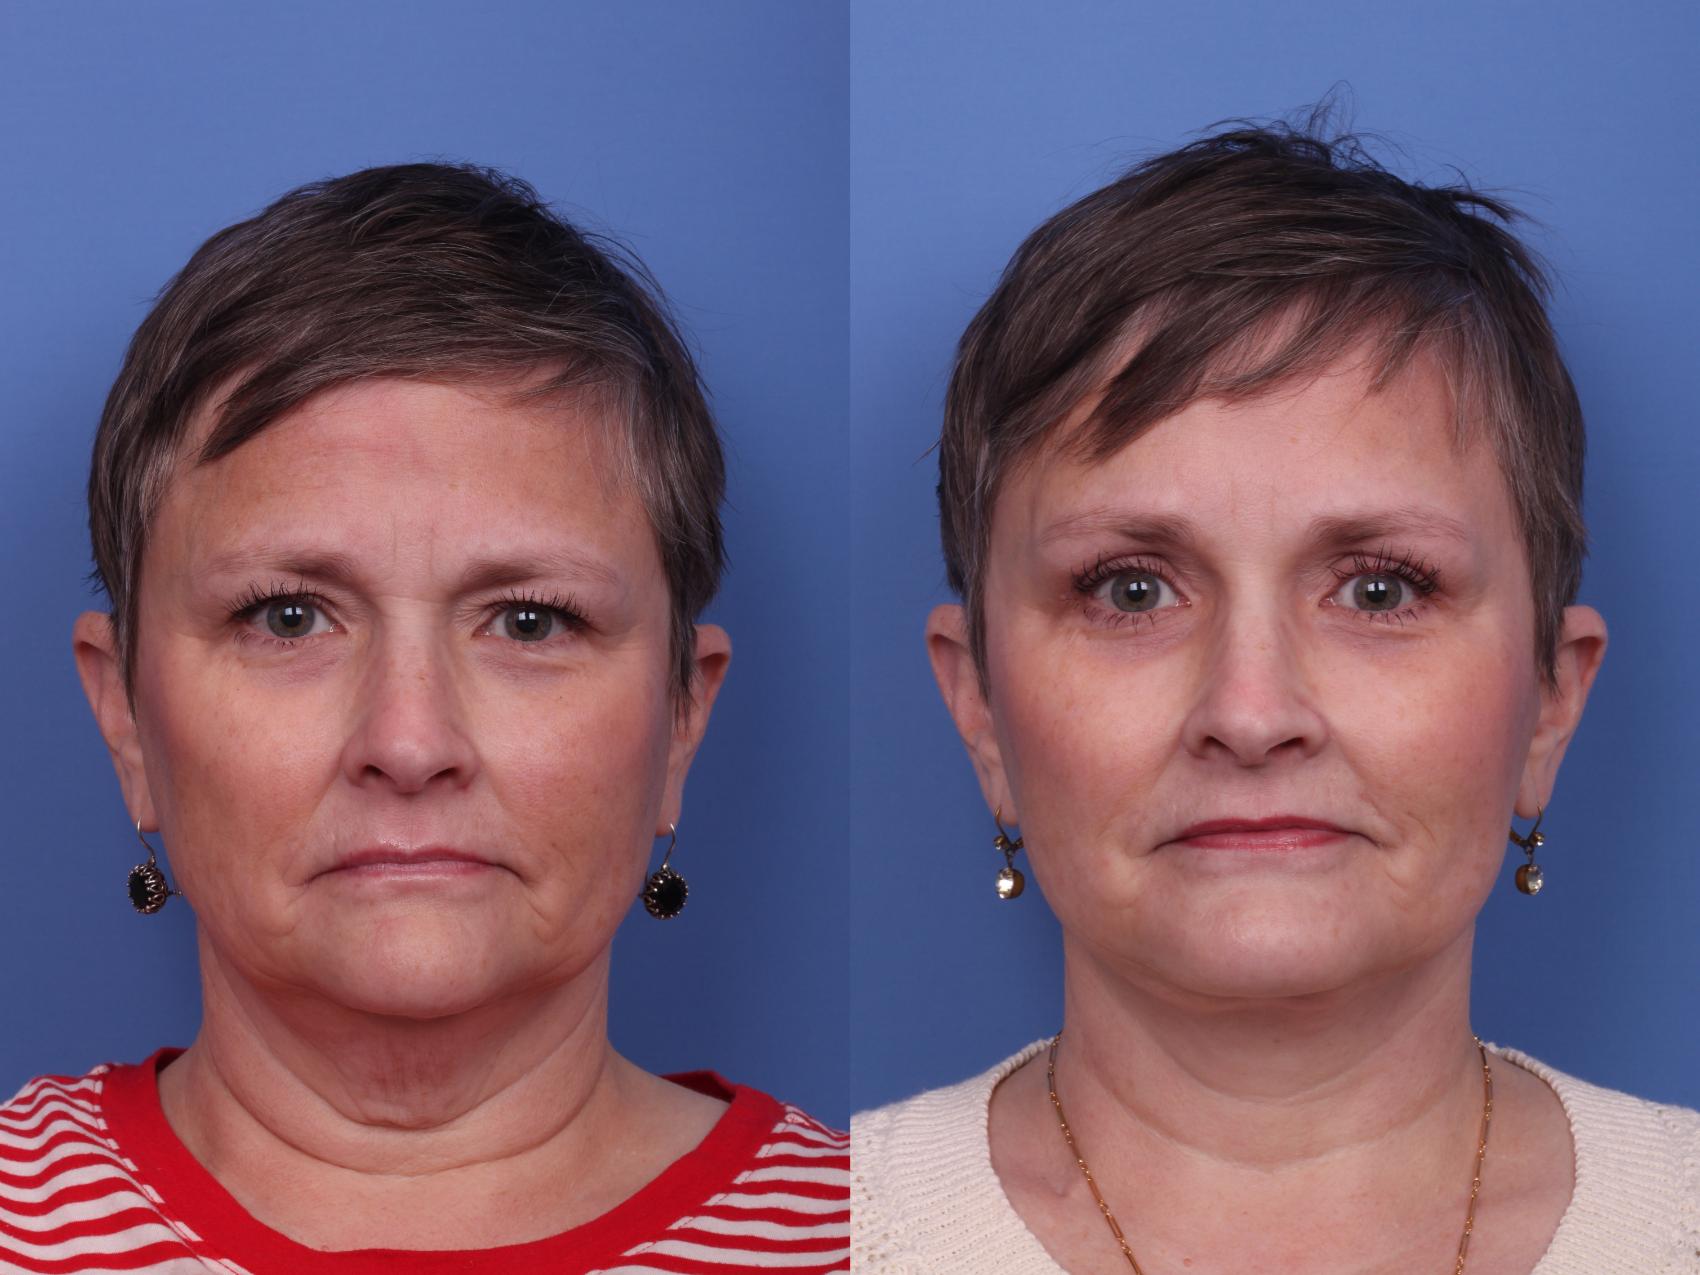 Brow Lift Before & After Photo | Scottsdale & Phoenix, AZ | Hobgood Facial Plastic Surgery: Todd Hobgood, MD